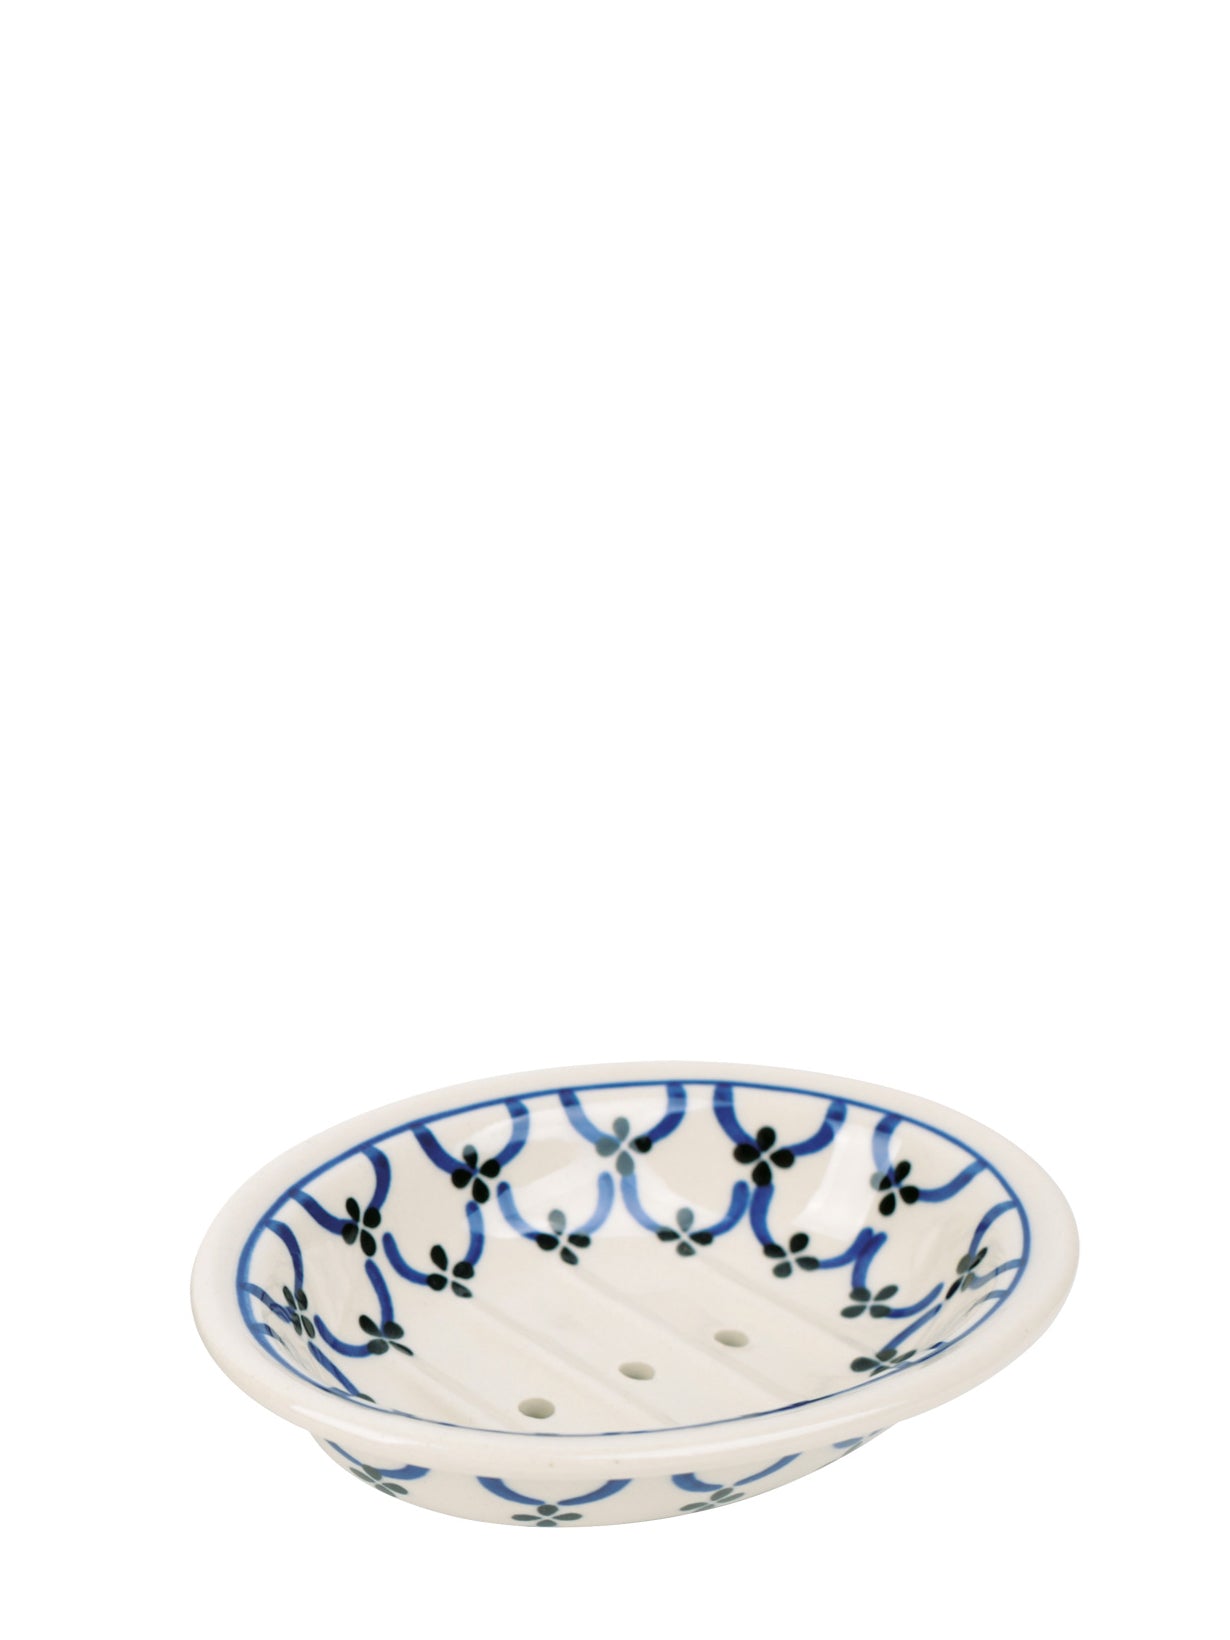 Ceramic soap dish, peacock pattern